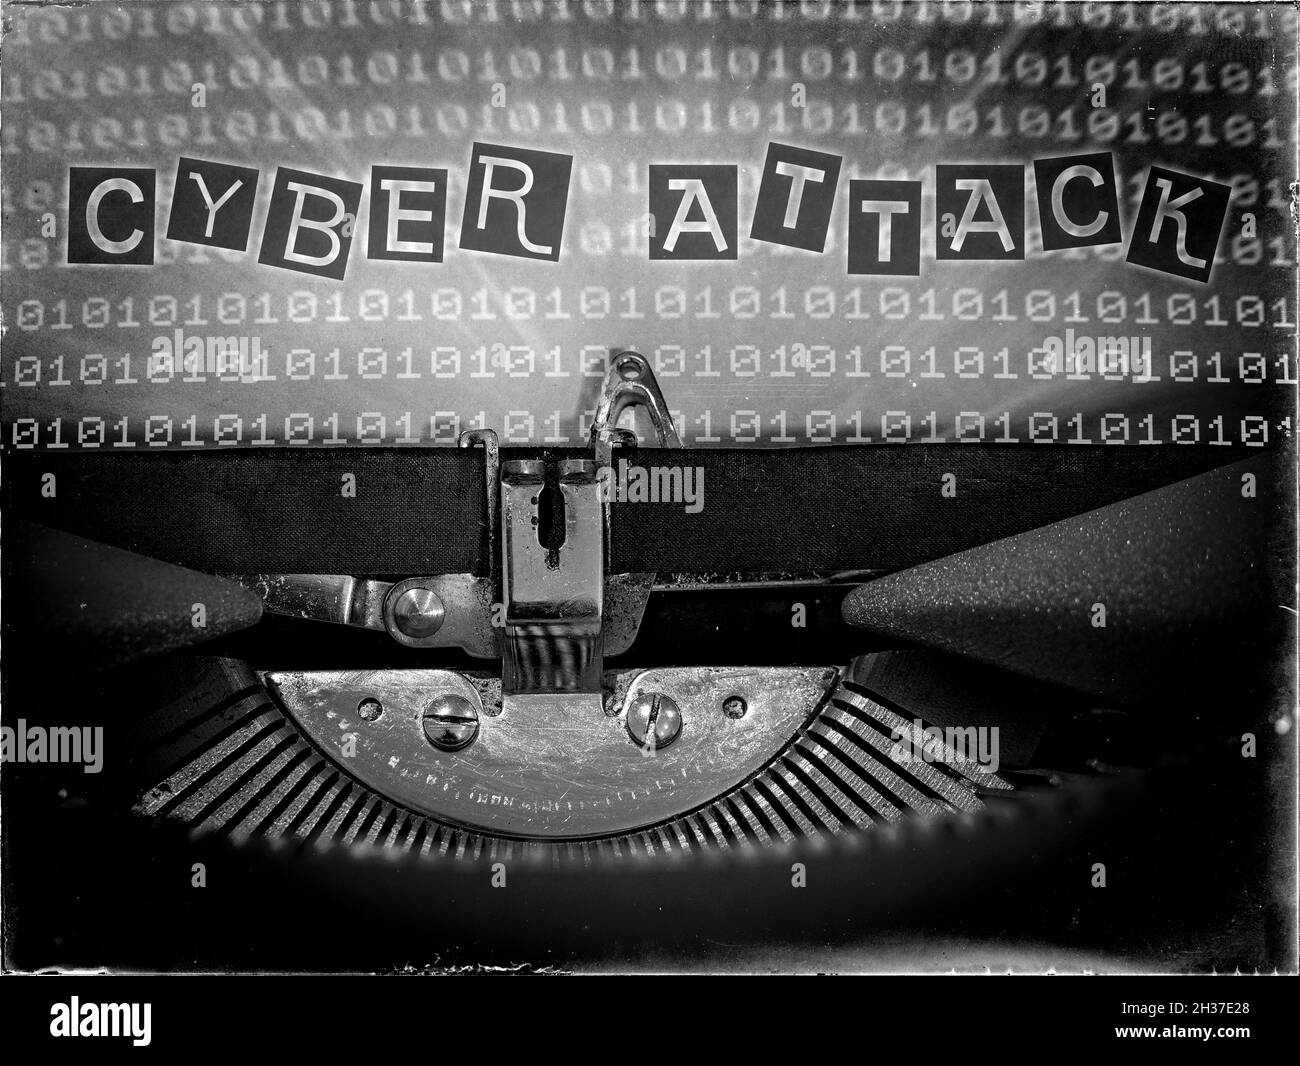 Cyber Attack, Cyberattack, Vintage Typewriter, Technology, Retrofuturism Stock Photo